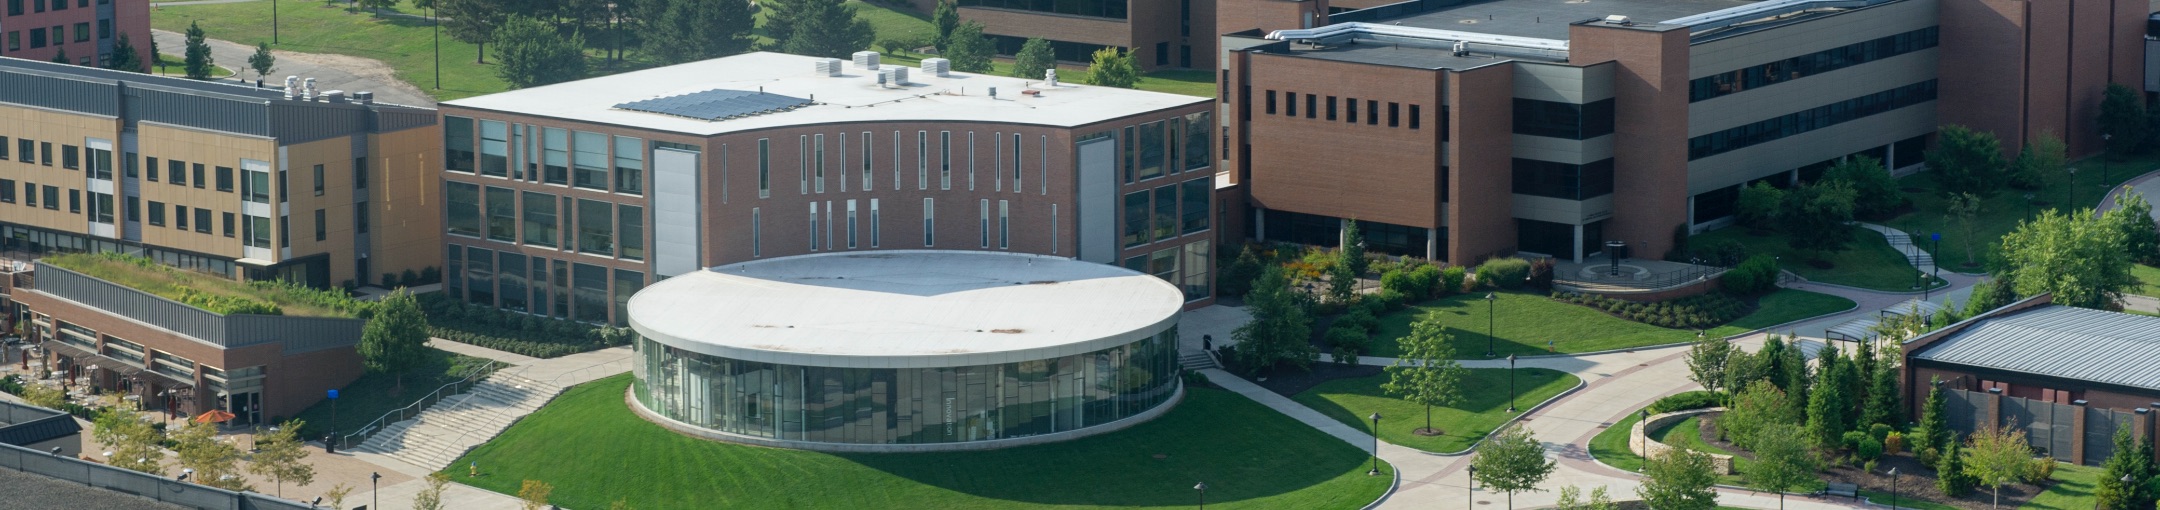 Aerial view of RIT Campus